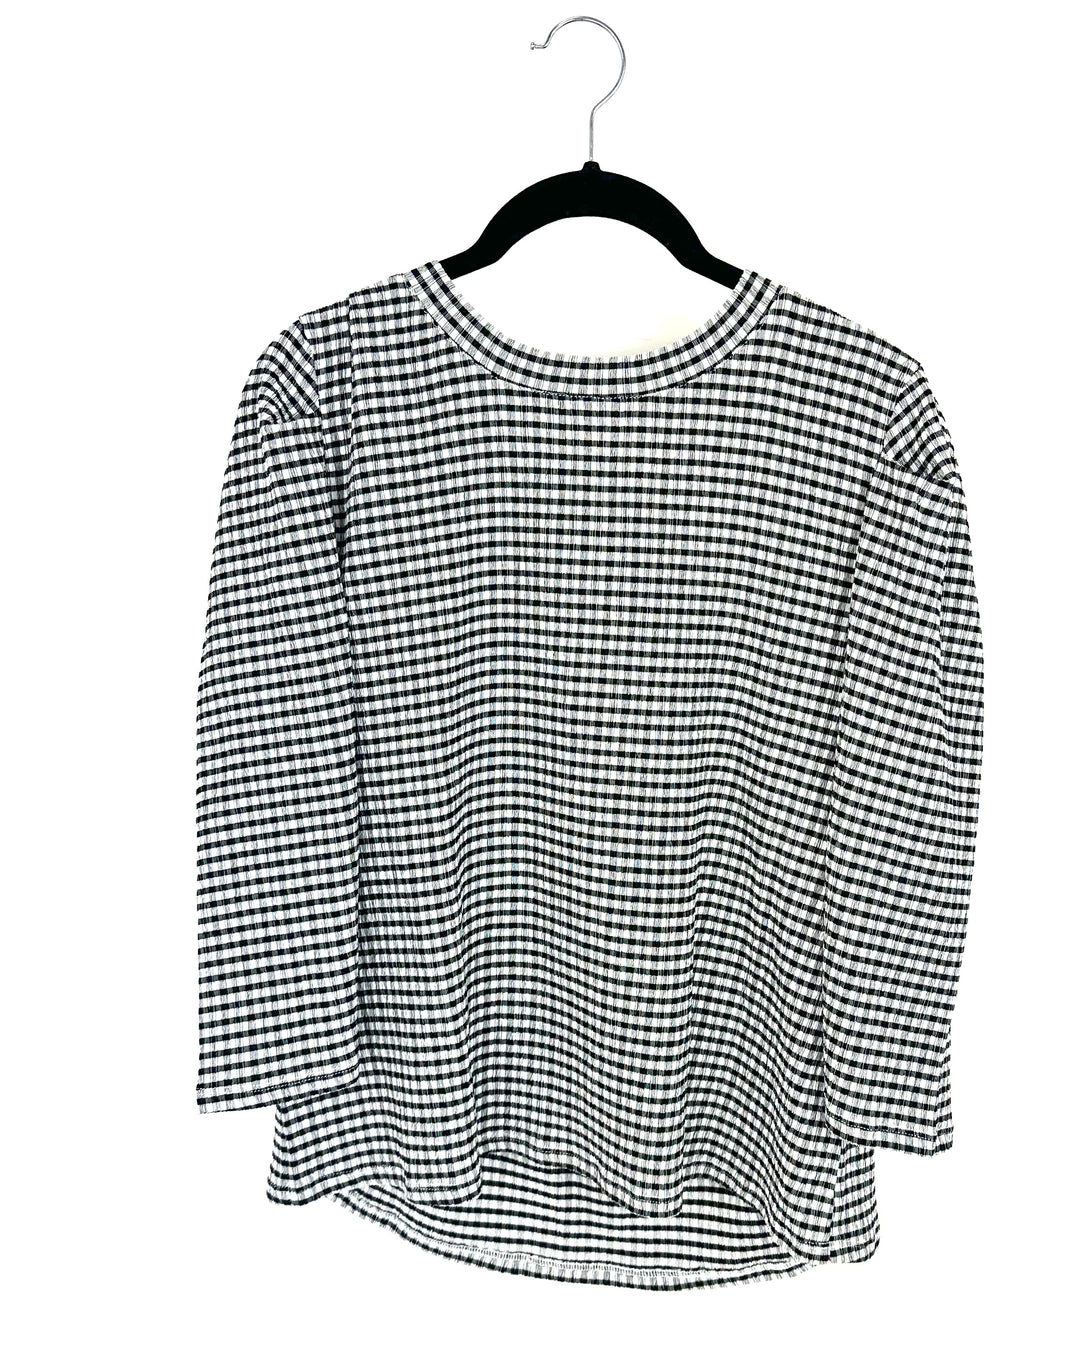 Black And White Checker Top - Size 6